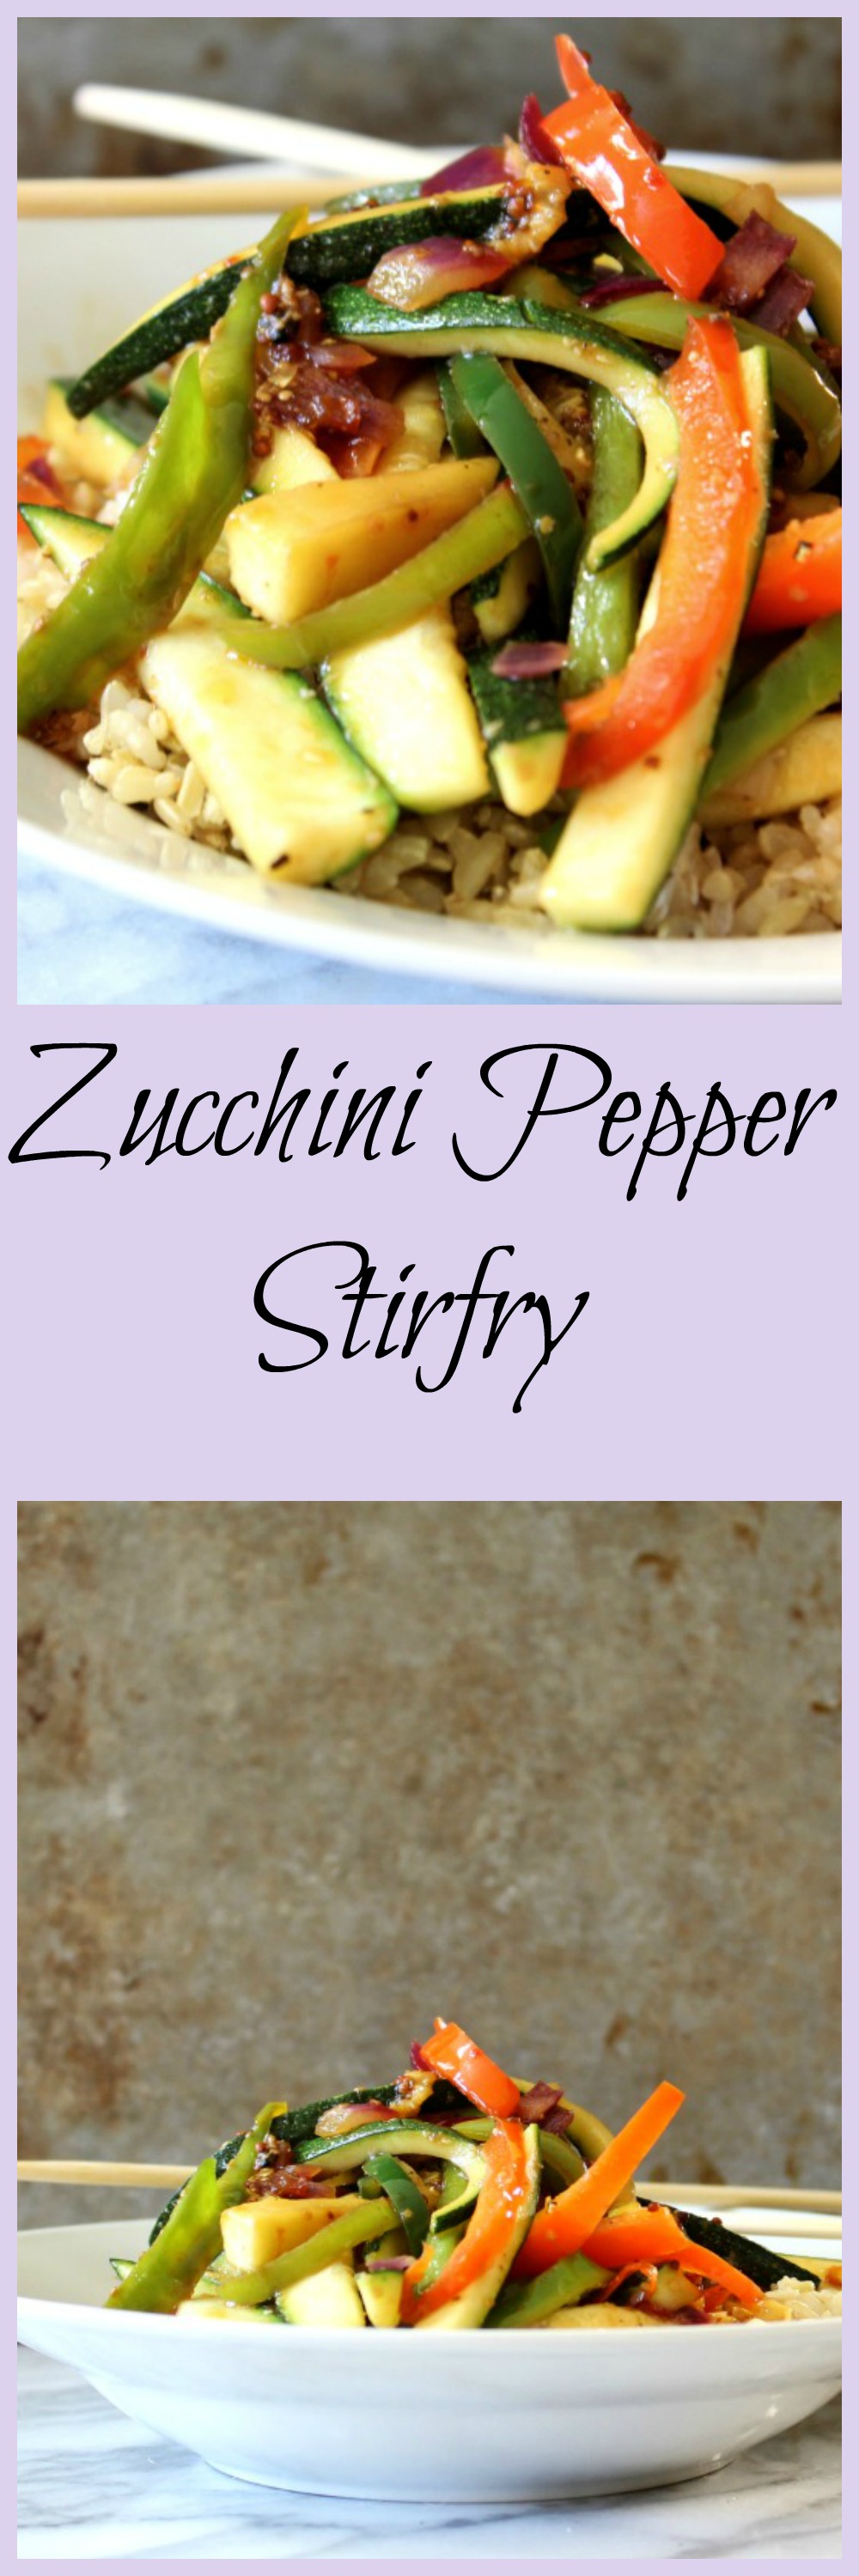 What are some quick zucchini recipes?